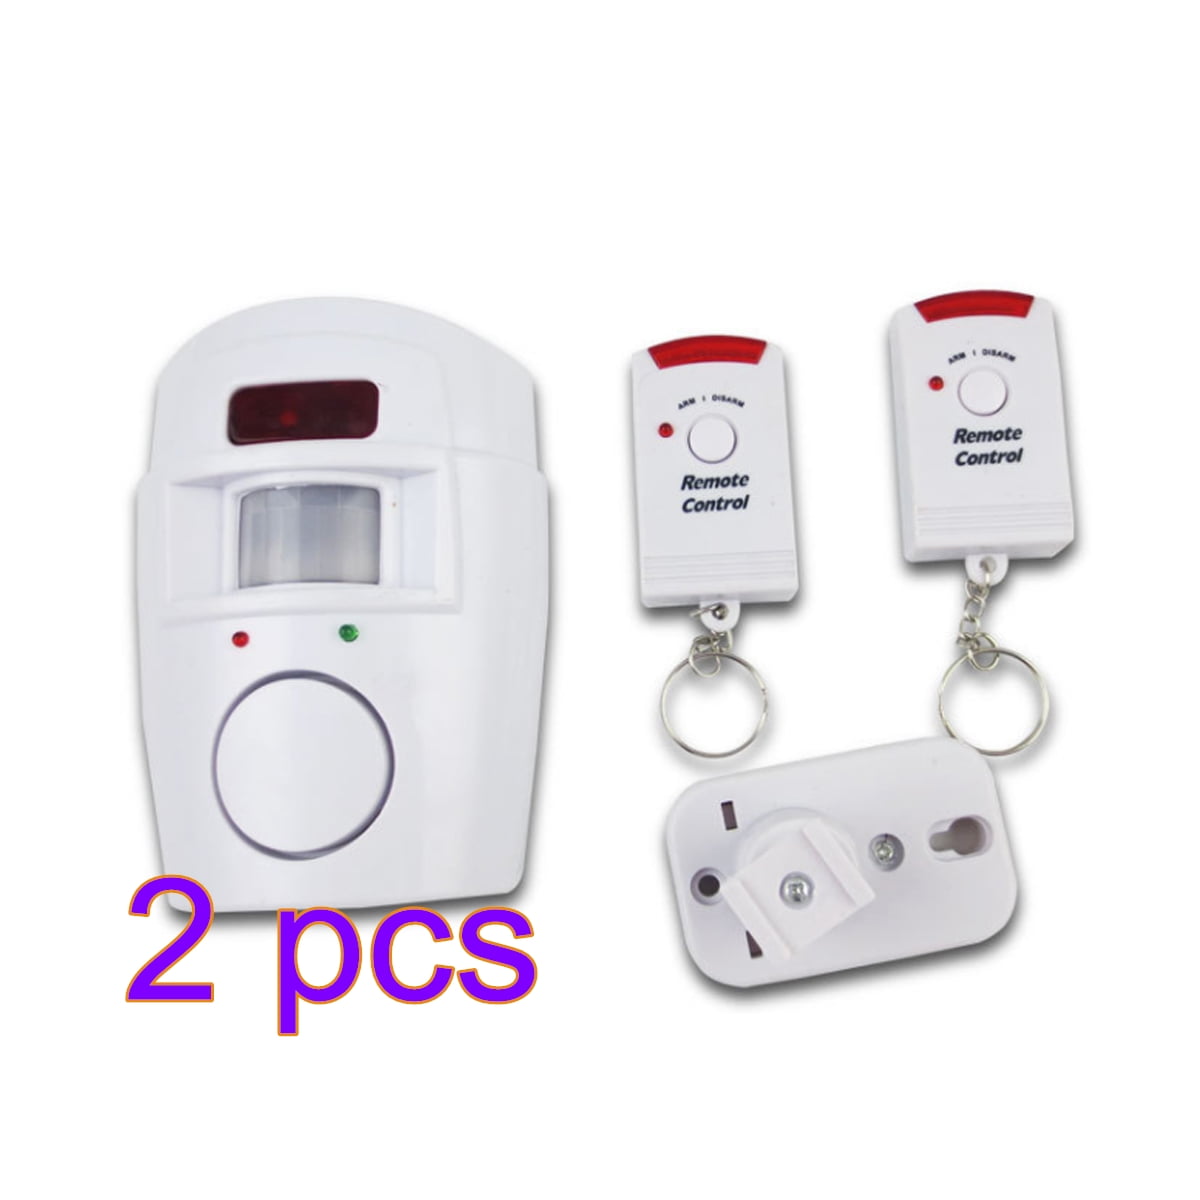 105dB Home Security Wireless IR Motion Sensor Alarm System 2Pcs Remote Control 